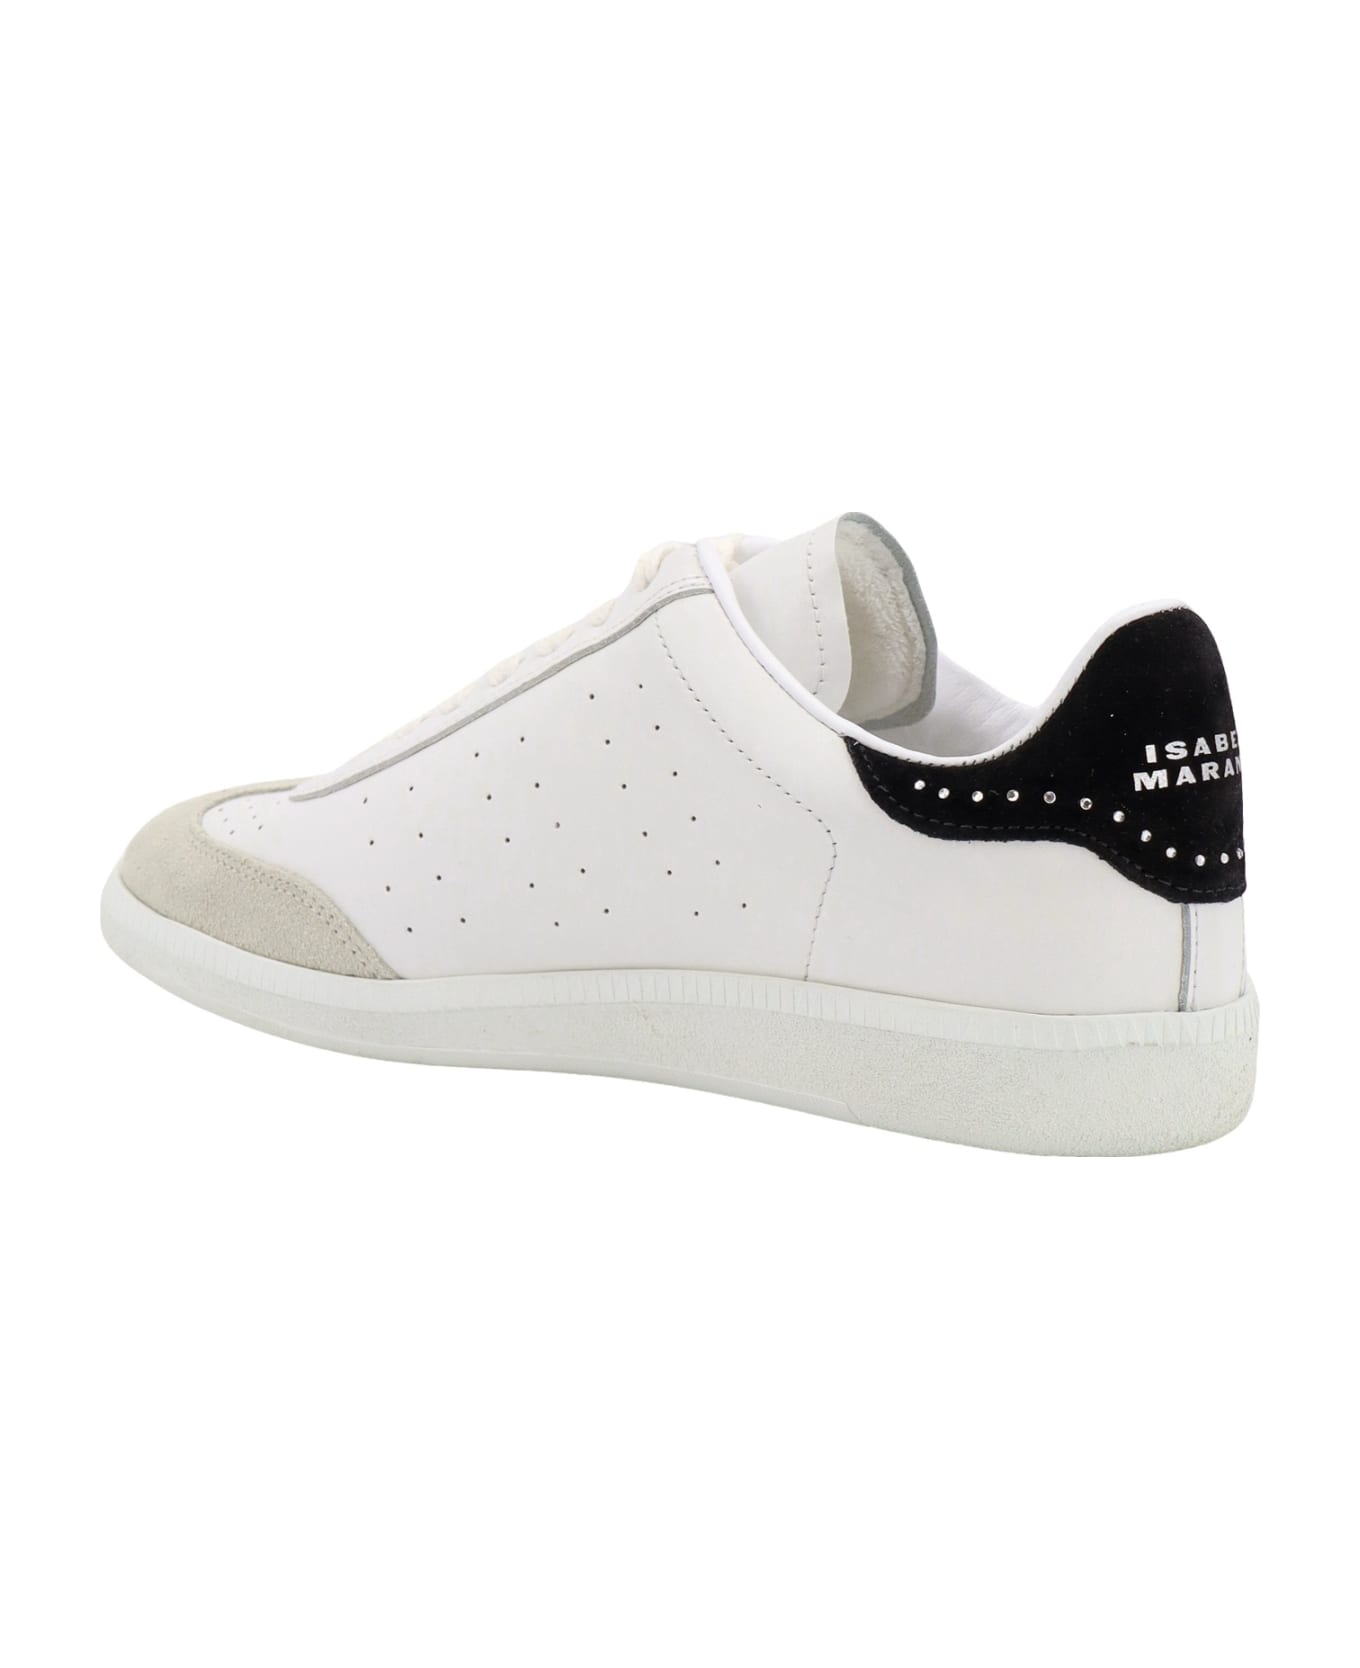 Isabel Marant Sneakers - Whb White Black スニーカー